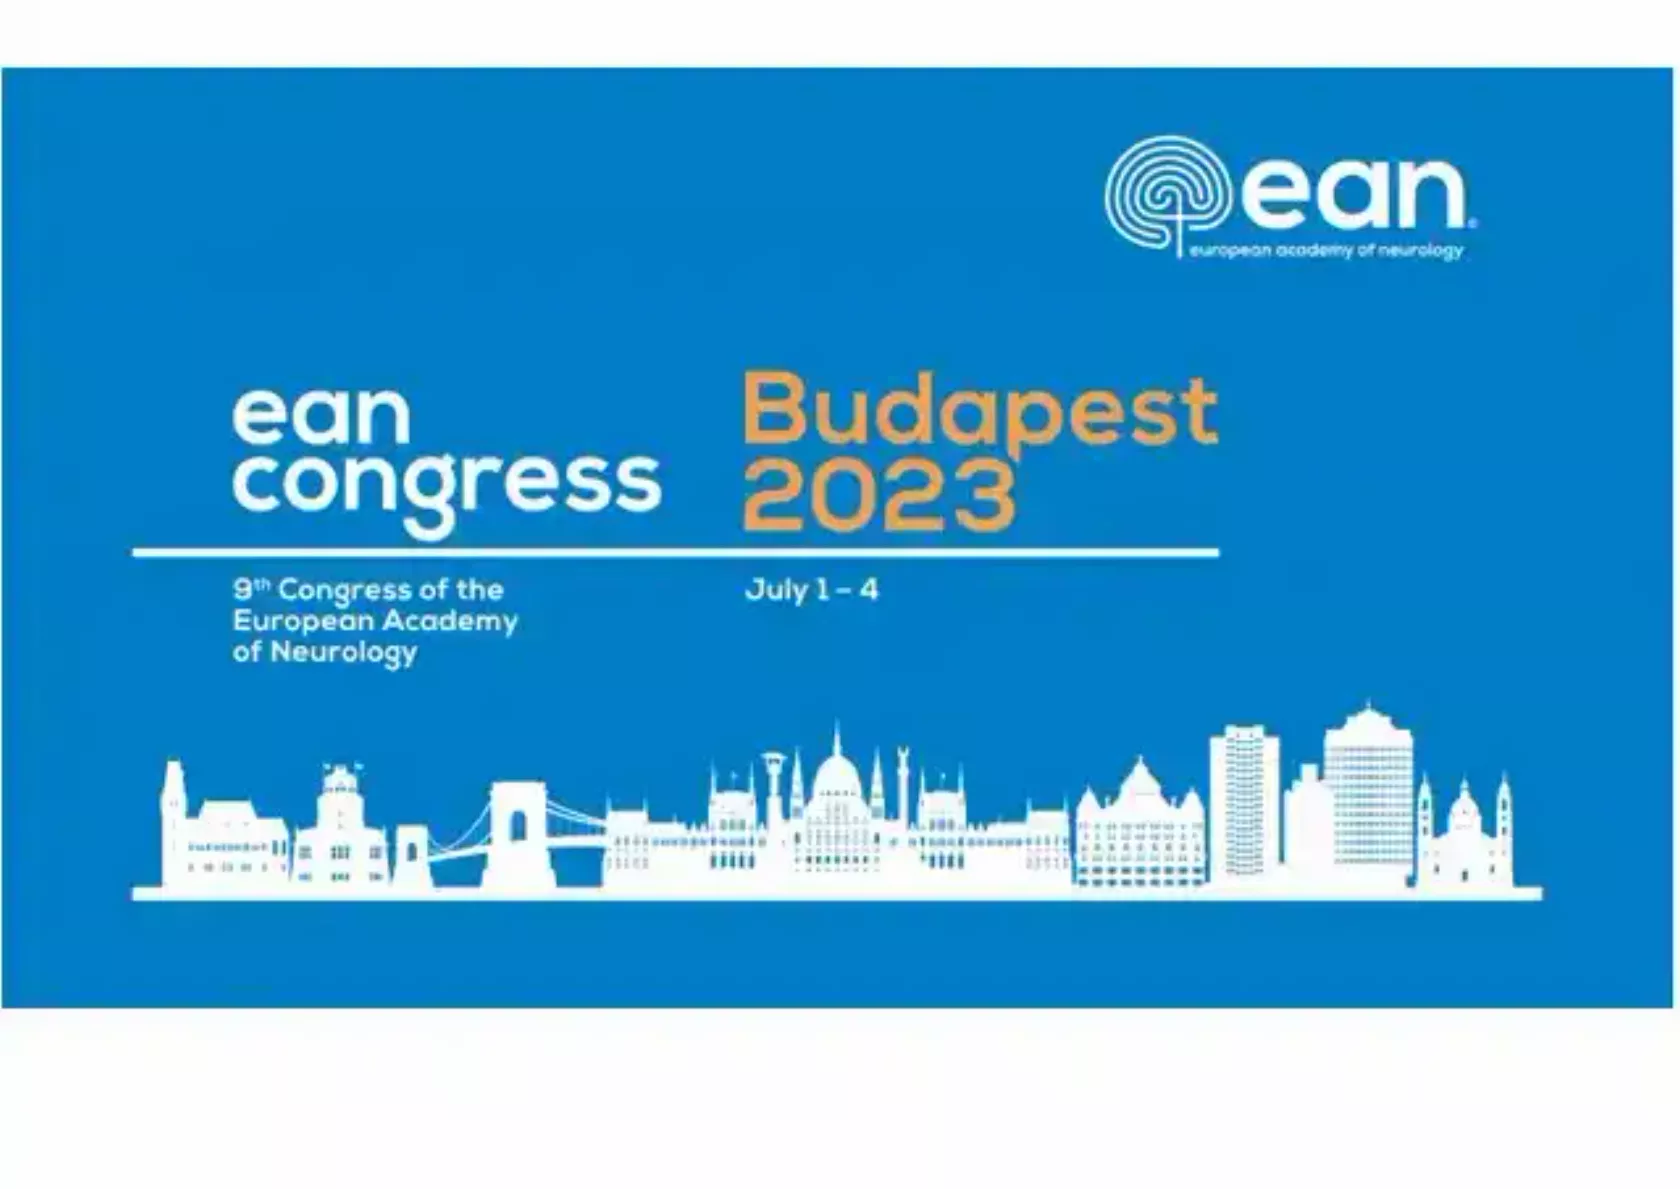 Kongresslogo EAN Congress 2023 in Budapest.